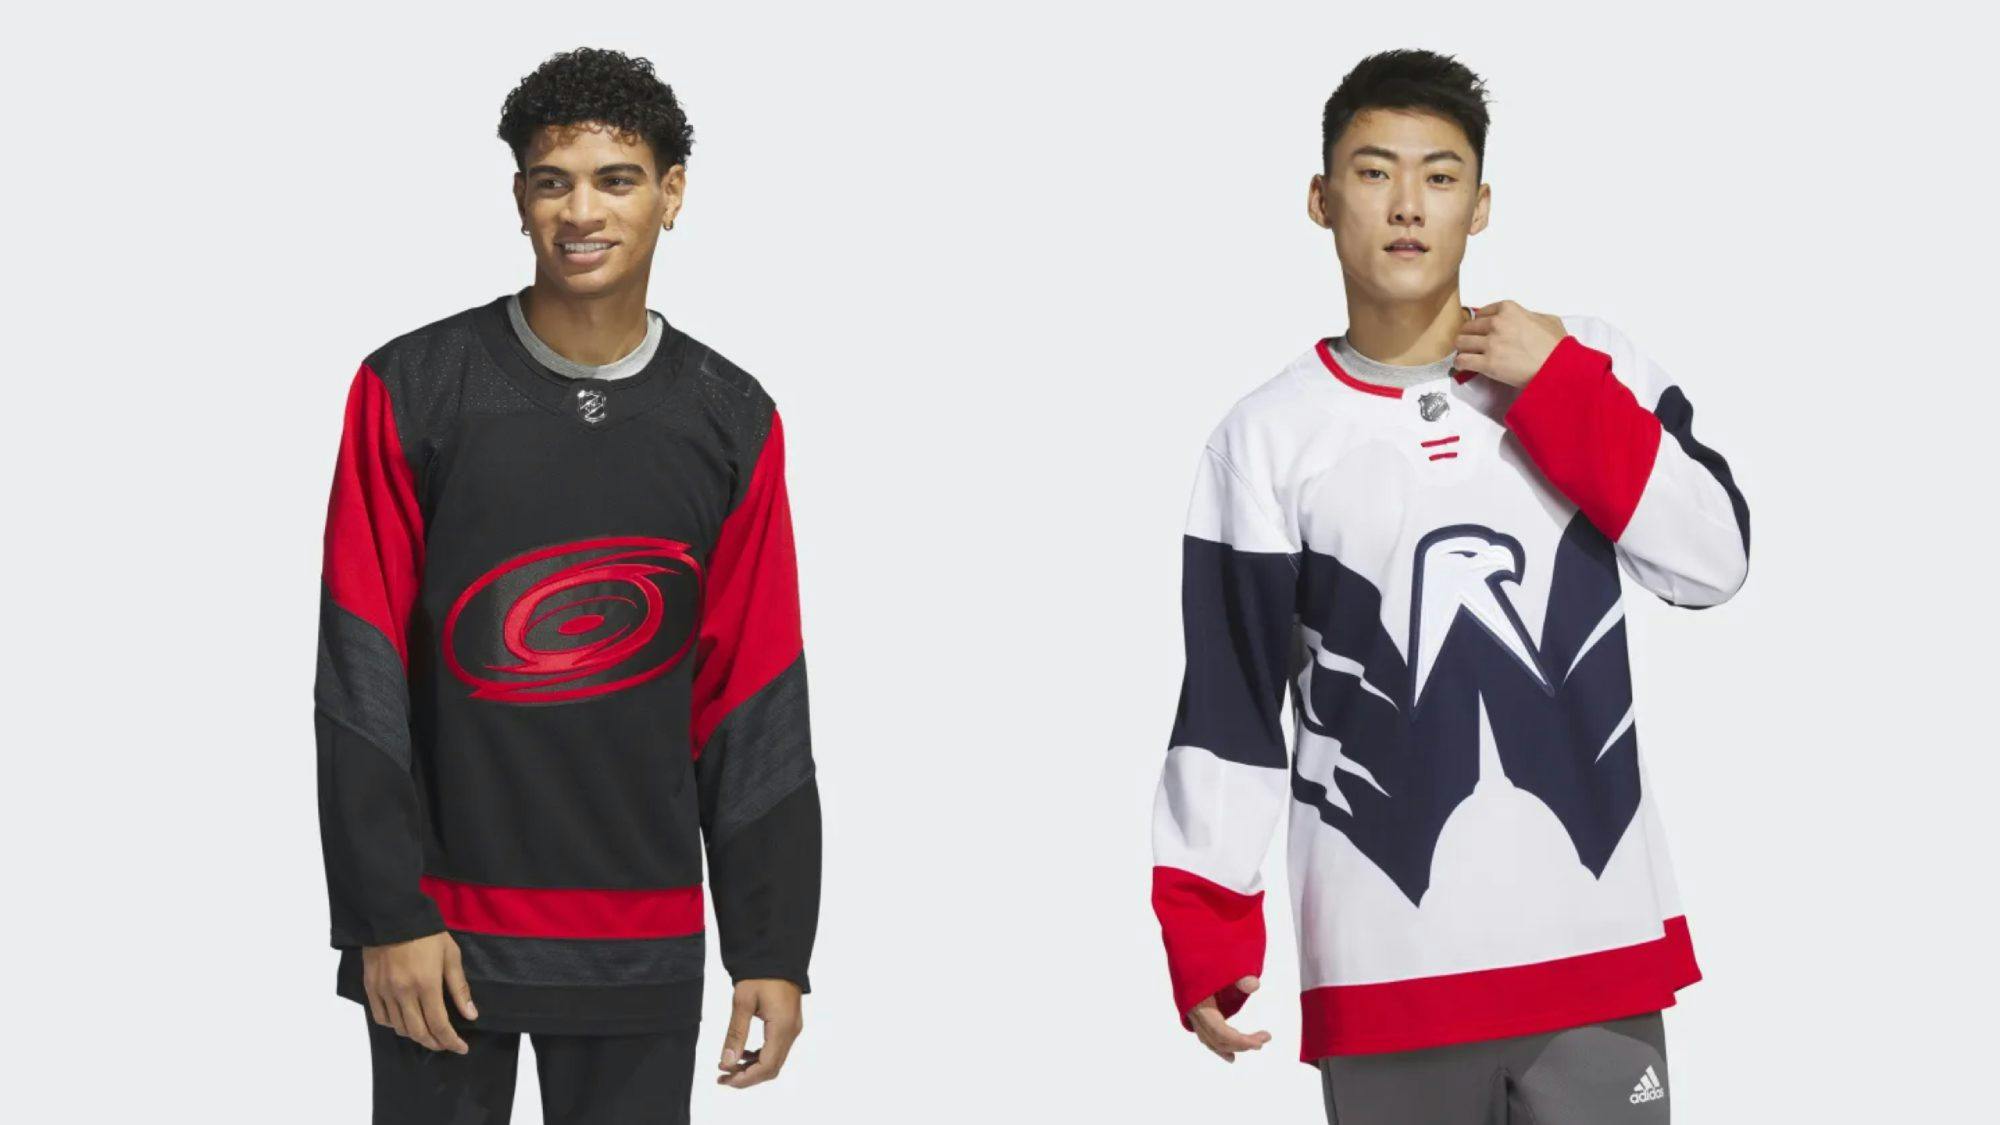 PHOTOS: Capitals unveil new uniform for NHL Stadium Series Game - WTOP News